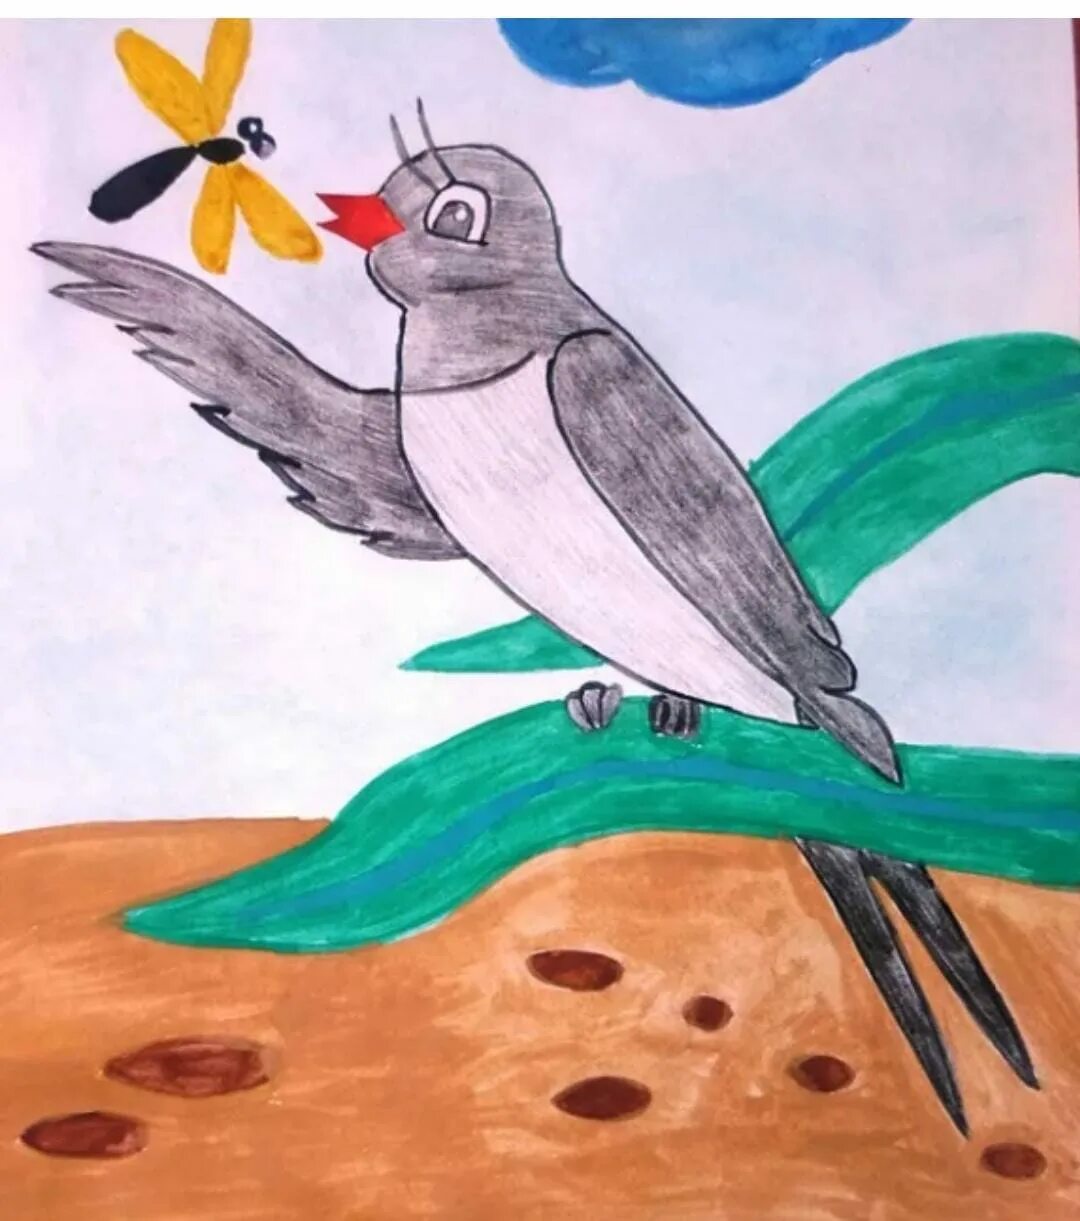 Рисунок на тему день птиц. Детские рисунки птиц. Рисунок птицы на конкурс. День рисования птиц. Рисунок ко Дню птиц.